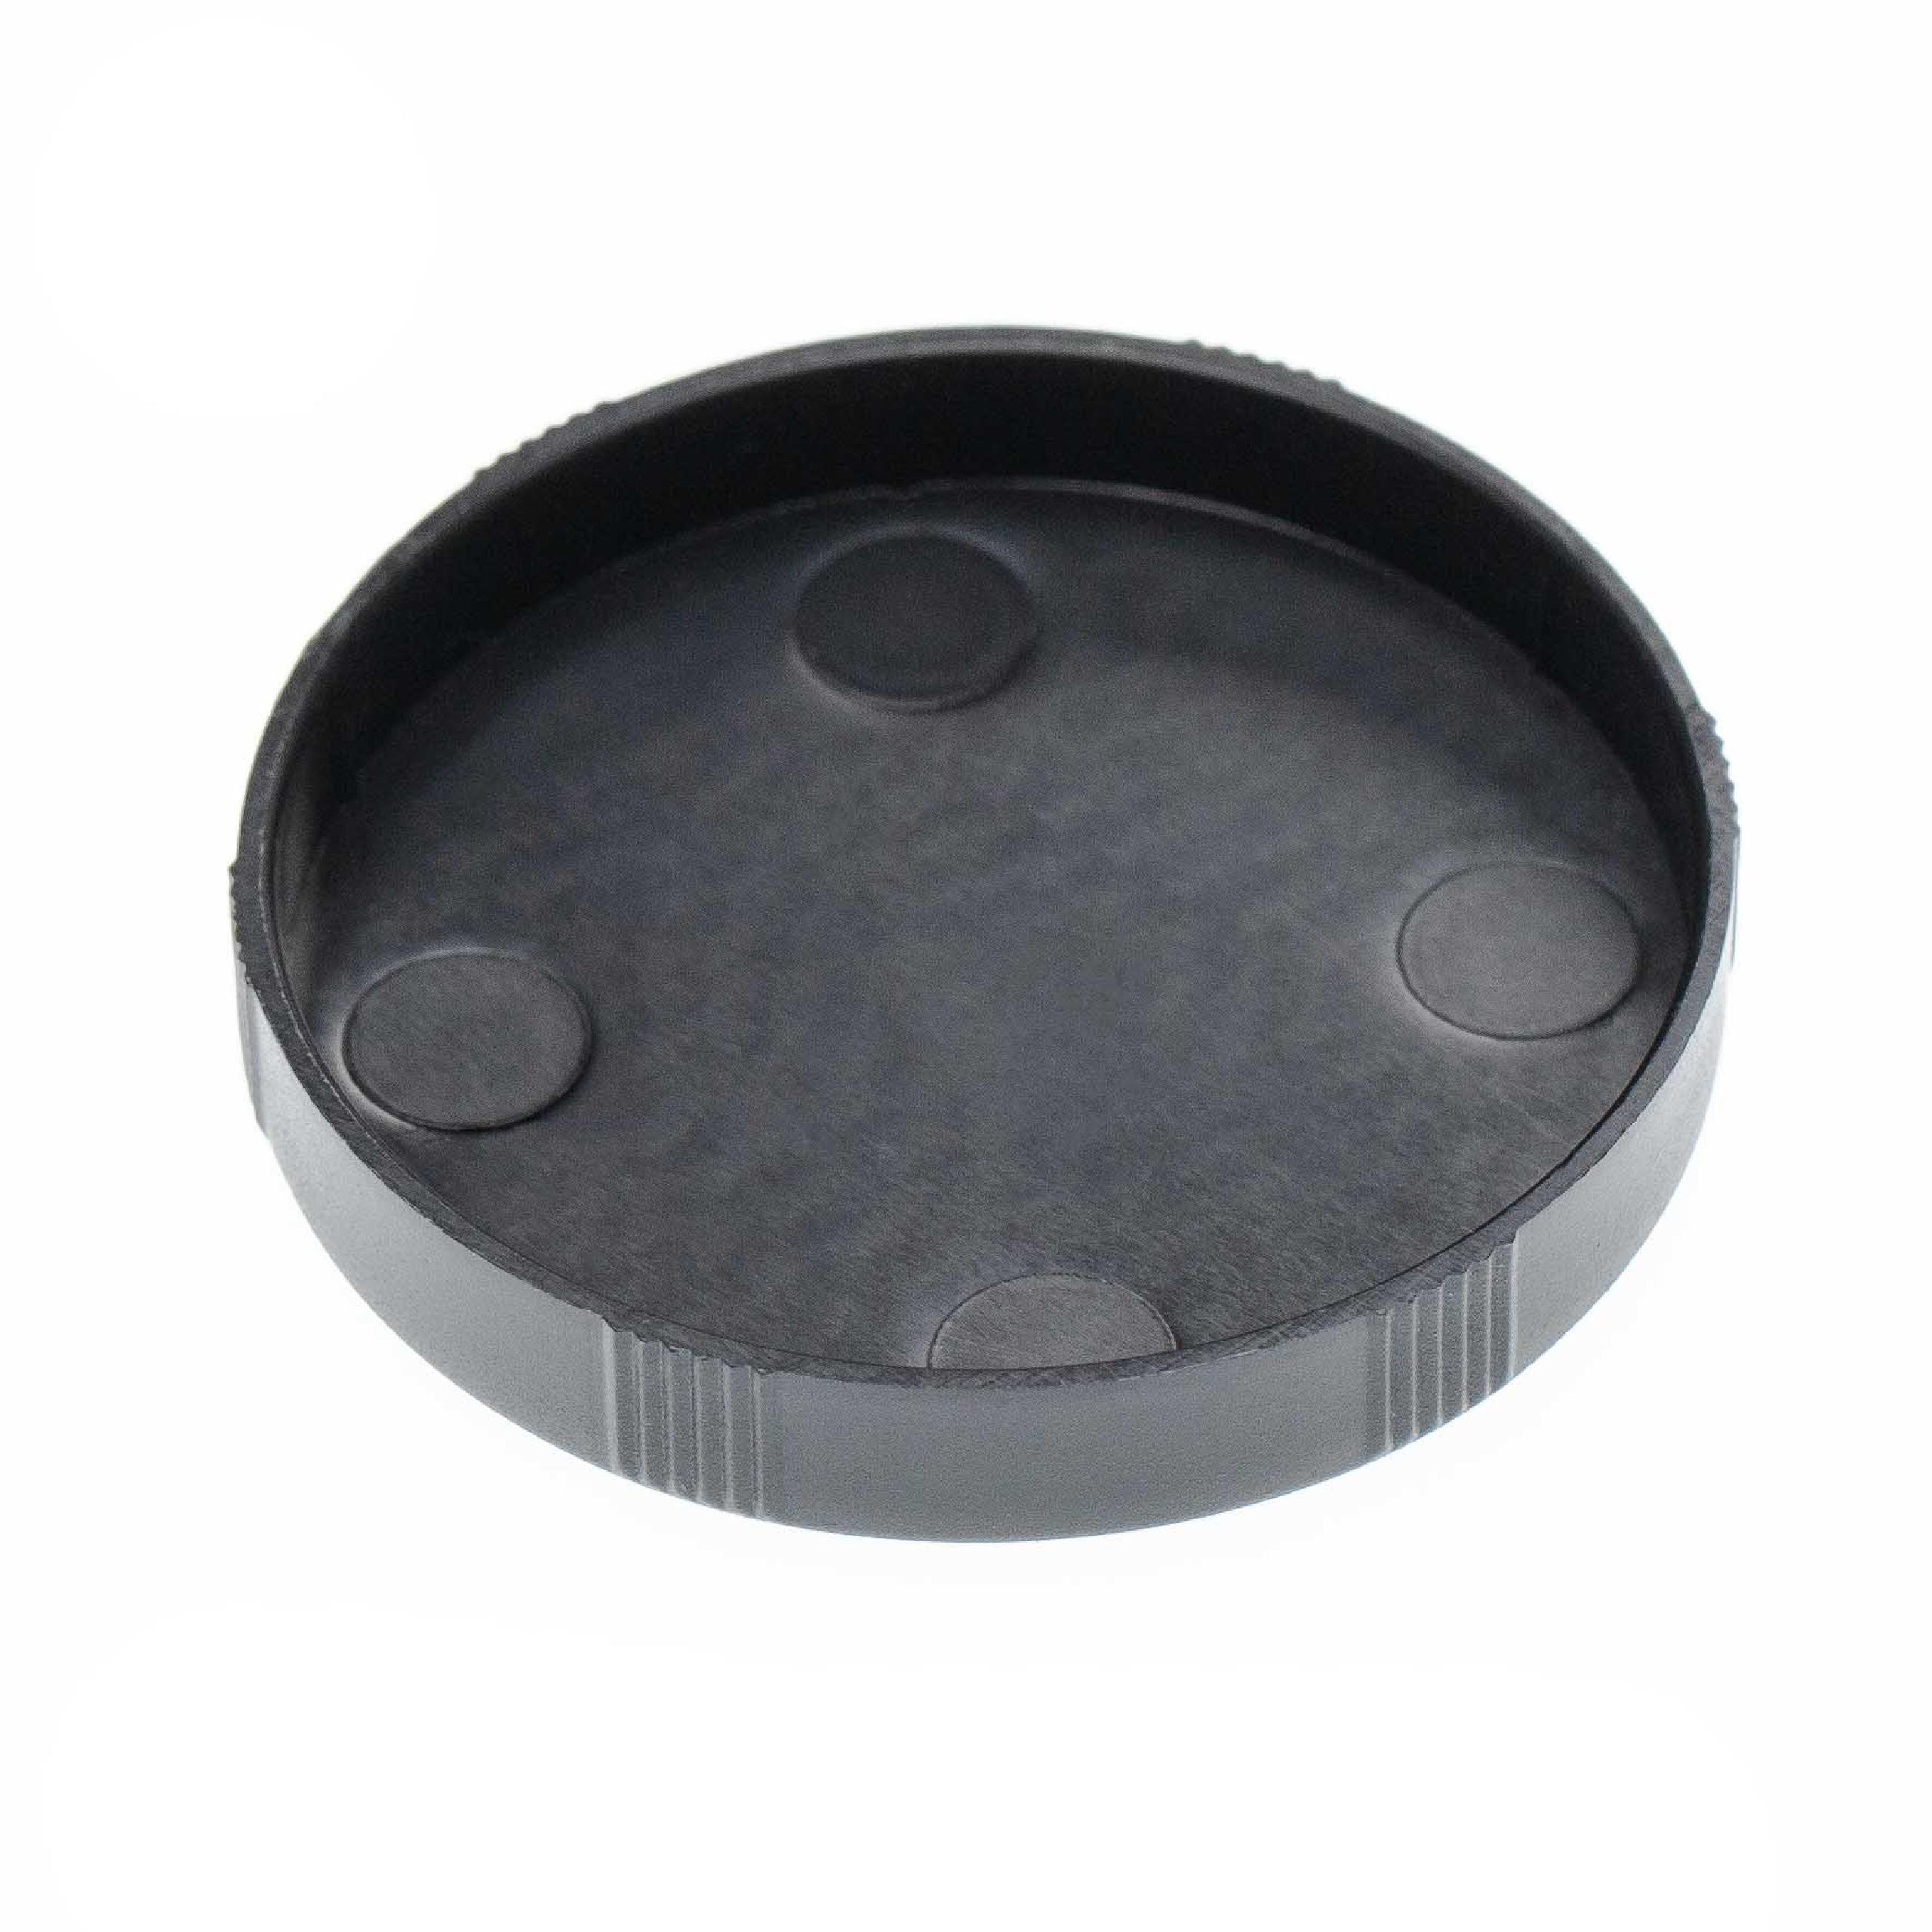 2x tapa objetivo para prismáticos con diámetro de 45 mm - negro, acoplable